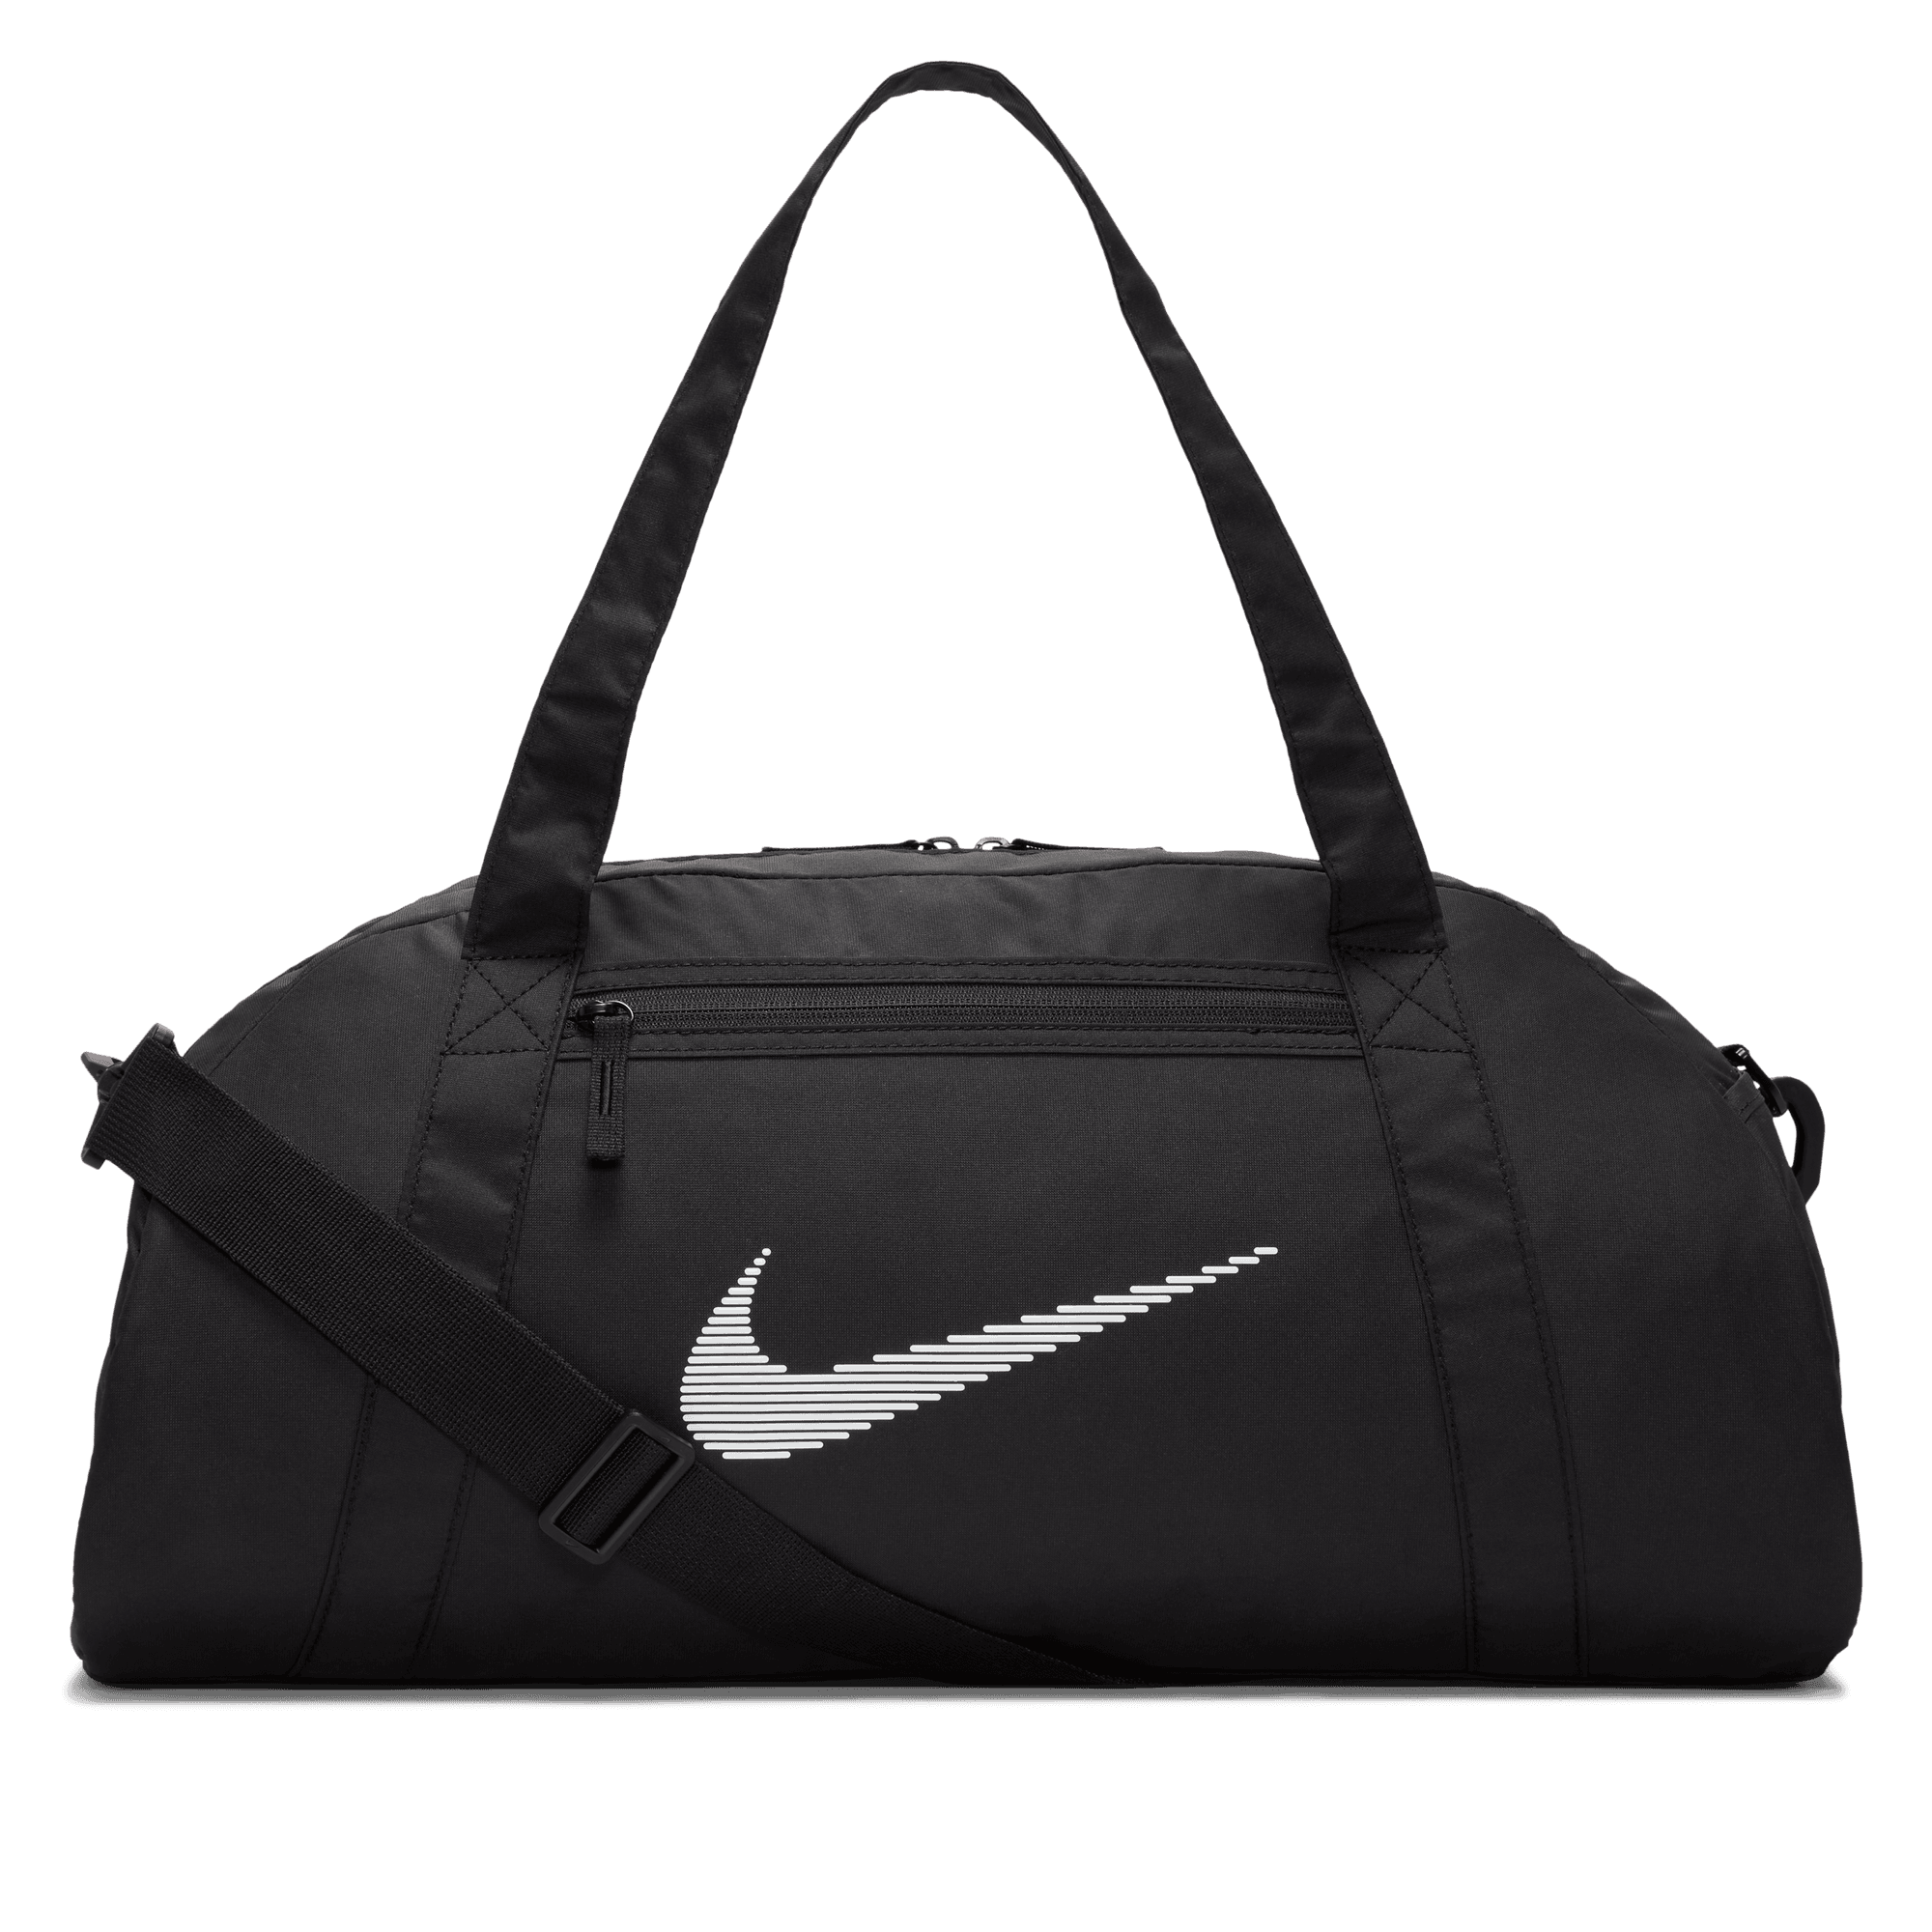 Nike Brasilia 9.5 Training Duffel Bag (Small, 41L) - Geode Teal